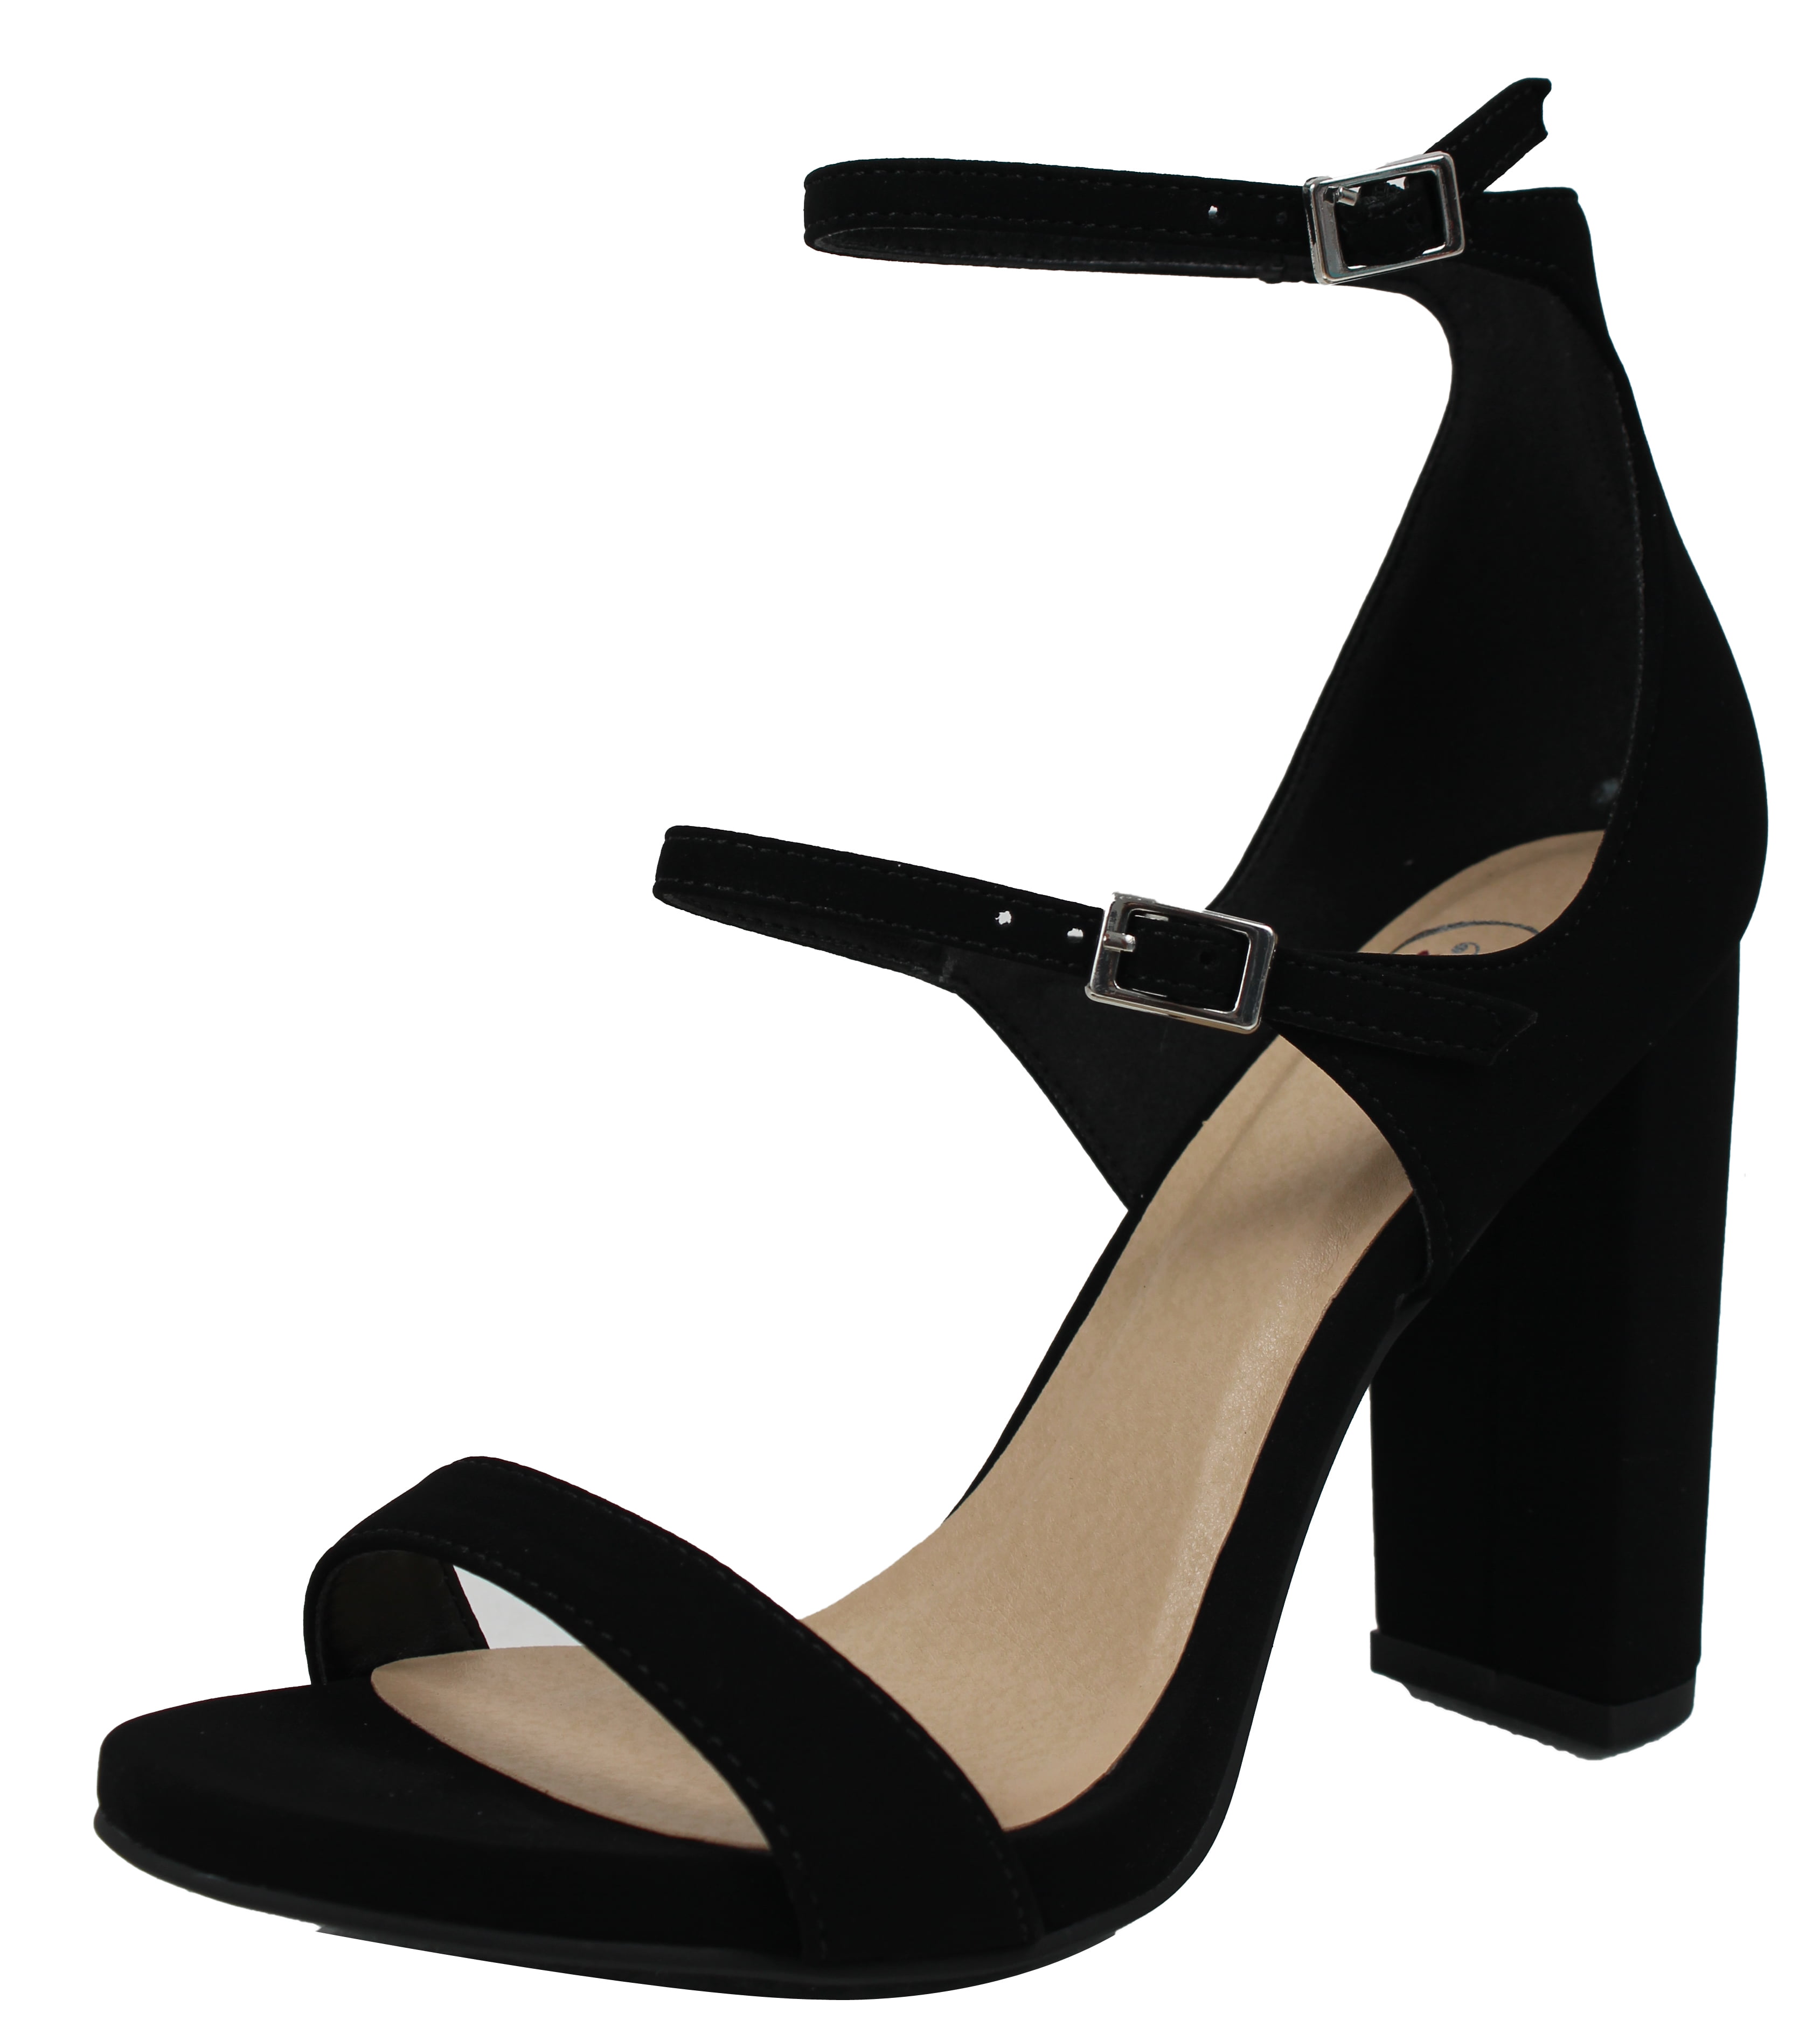 3 strap heels black